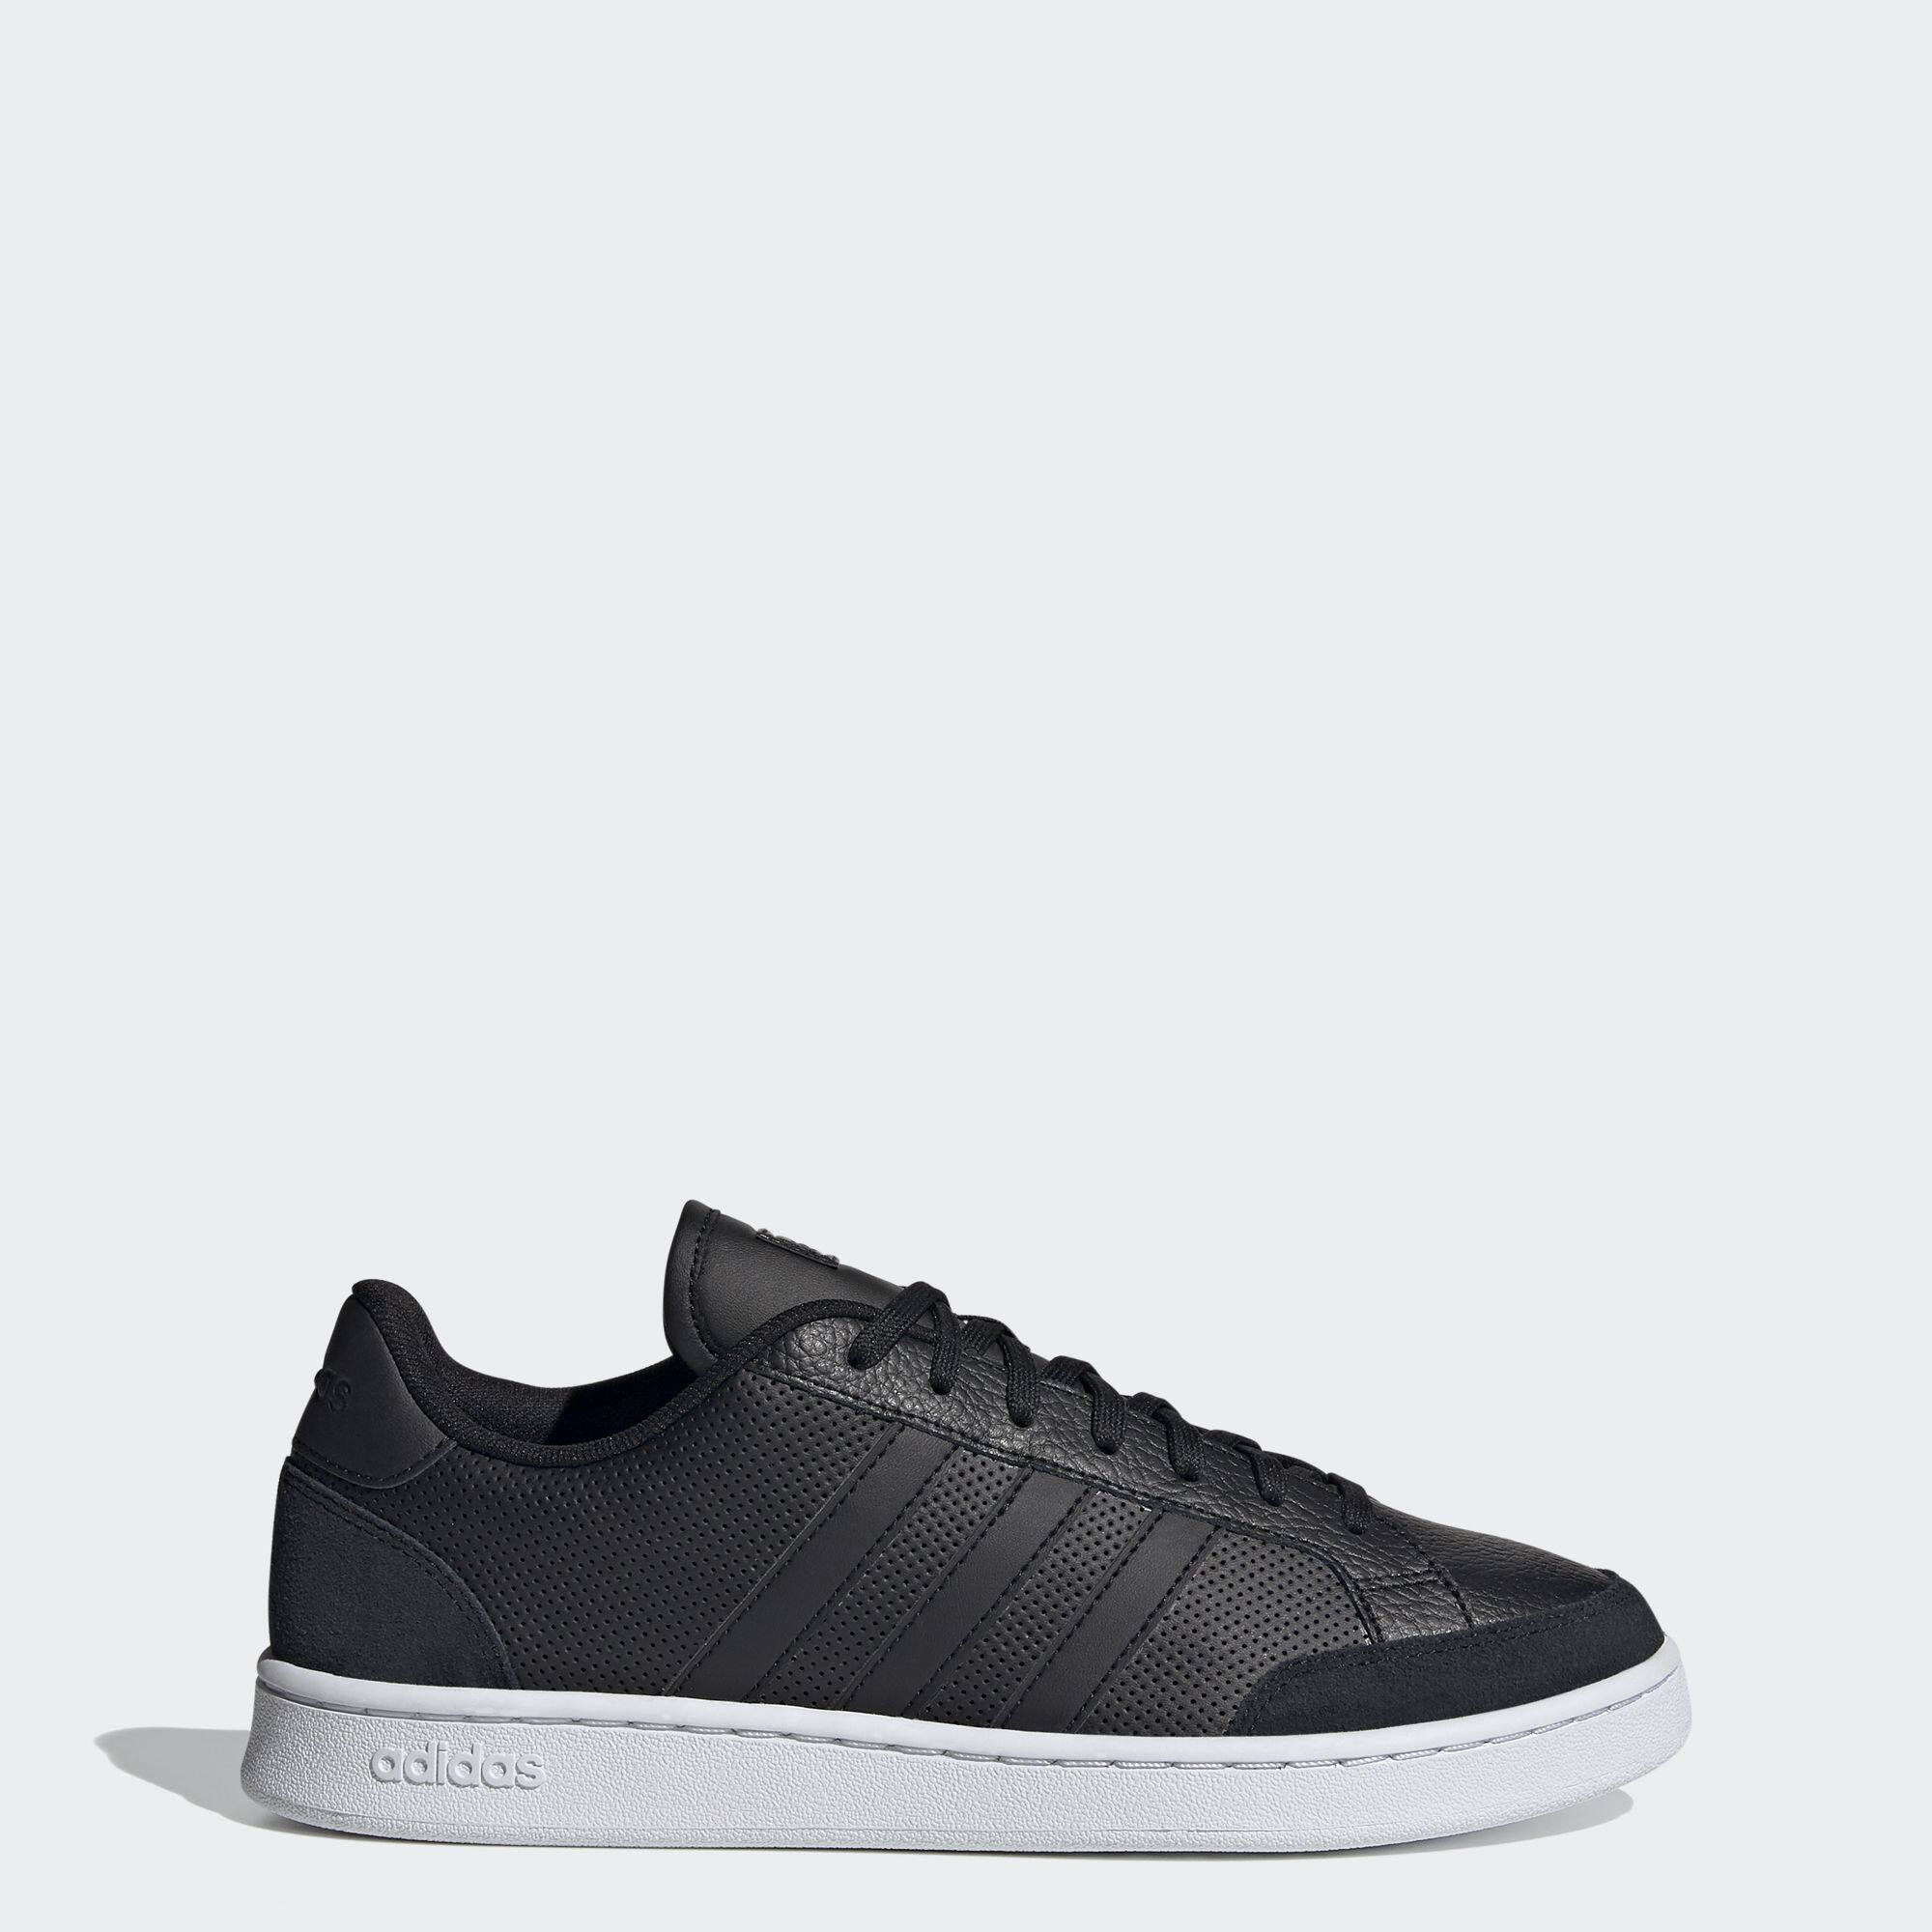 adidas TENNIS Grand Court SE Shoes ผู้ชาย สีดำ FY8549